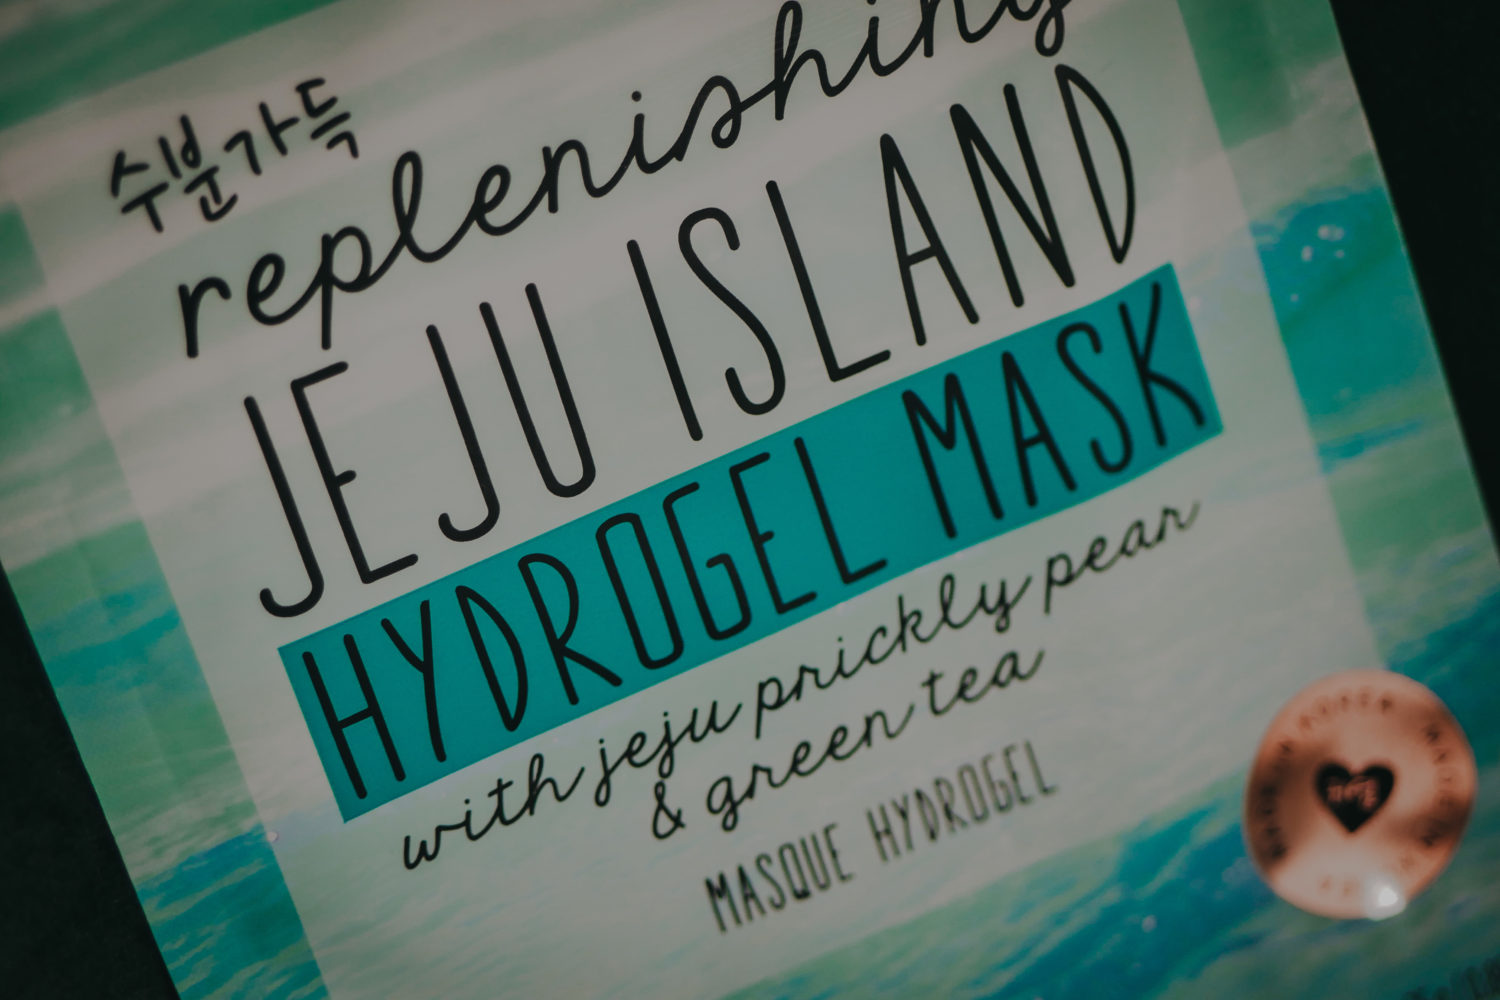 replenishing jeju island mask